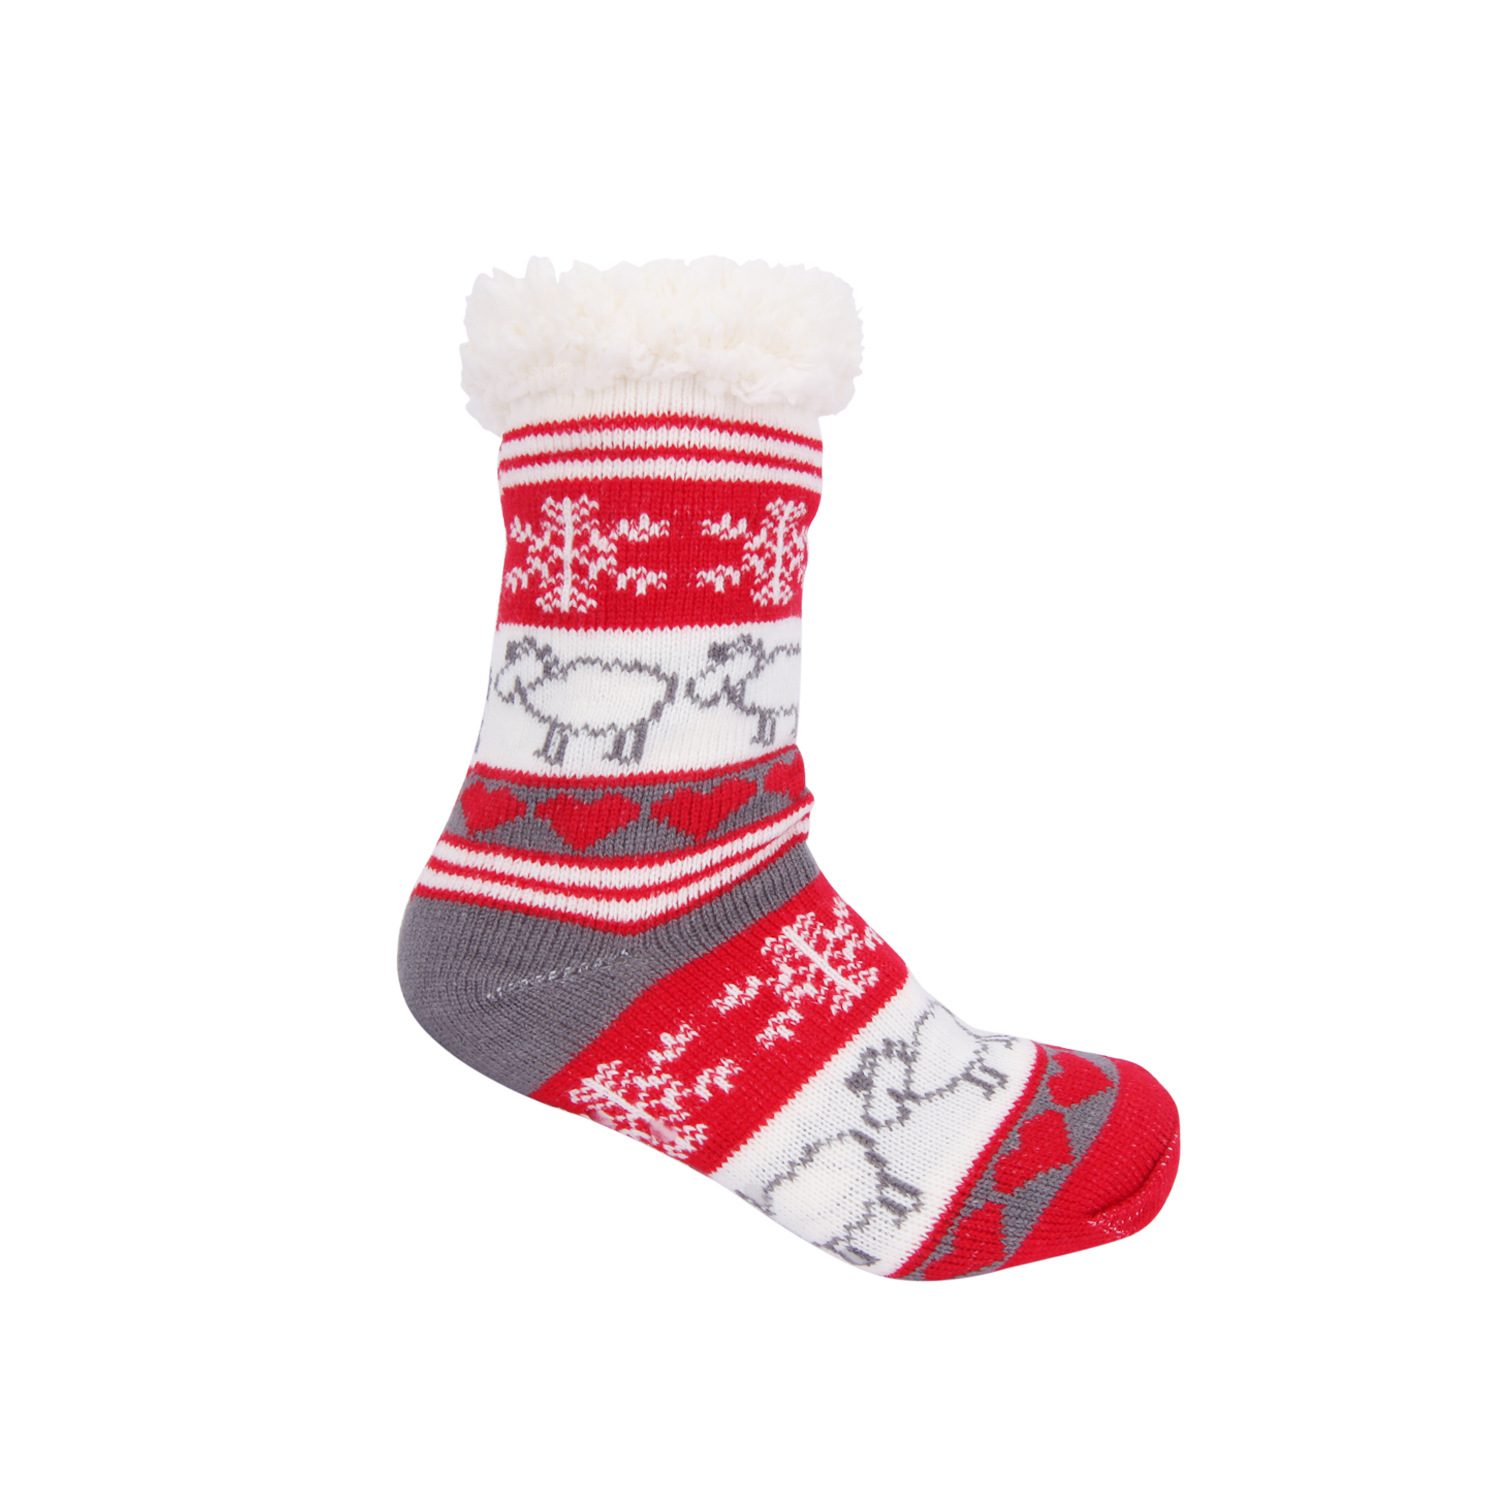 Well-designed Waterproof Running Socks - Fancy Christmas Socks Printed Fun Colorful Festive, Crew Knee Cozy Socks Holiday Design Soft Slipper Socks Reindeer Home floor Socks Winter Warm Cozy Fuzzy...